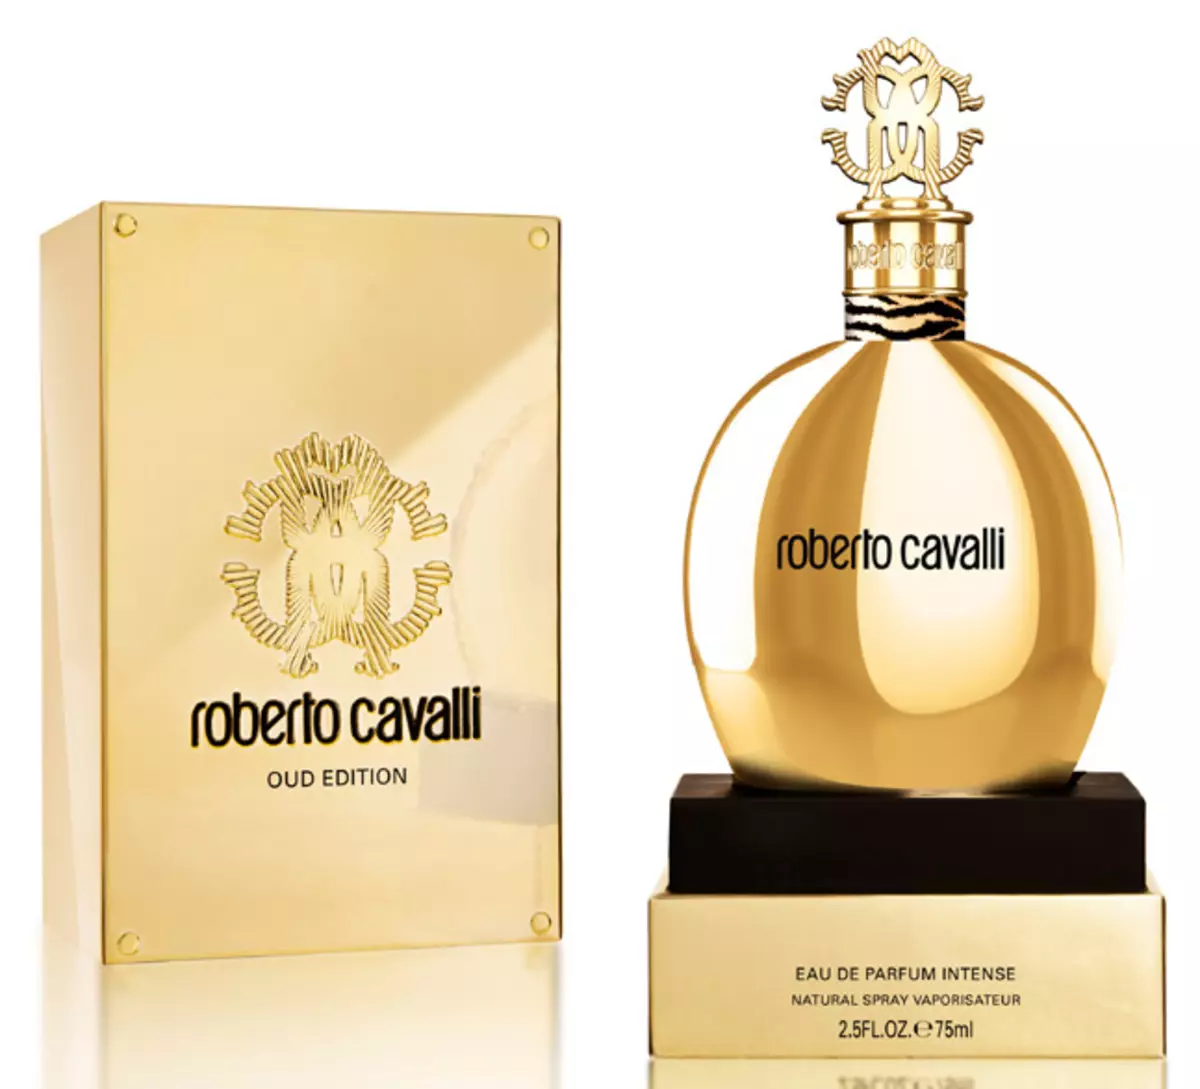 Perfume Roberto Cavalli: Perfume feminino, Just Cavalli e outro Toilette Auga, Aromas Roberto Cavalli Eau de Parfum, Paradiso e Acqua 25296_17